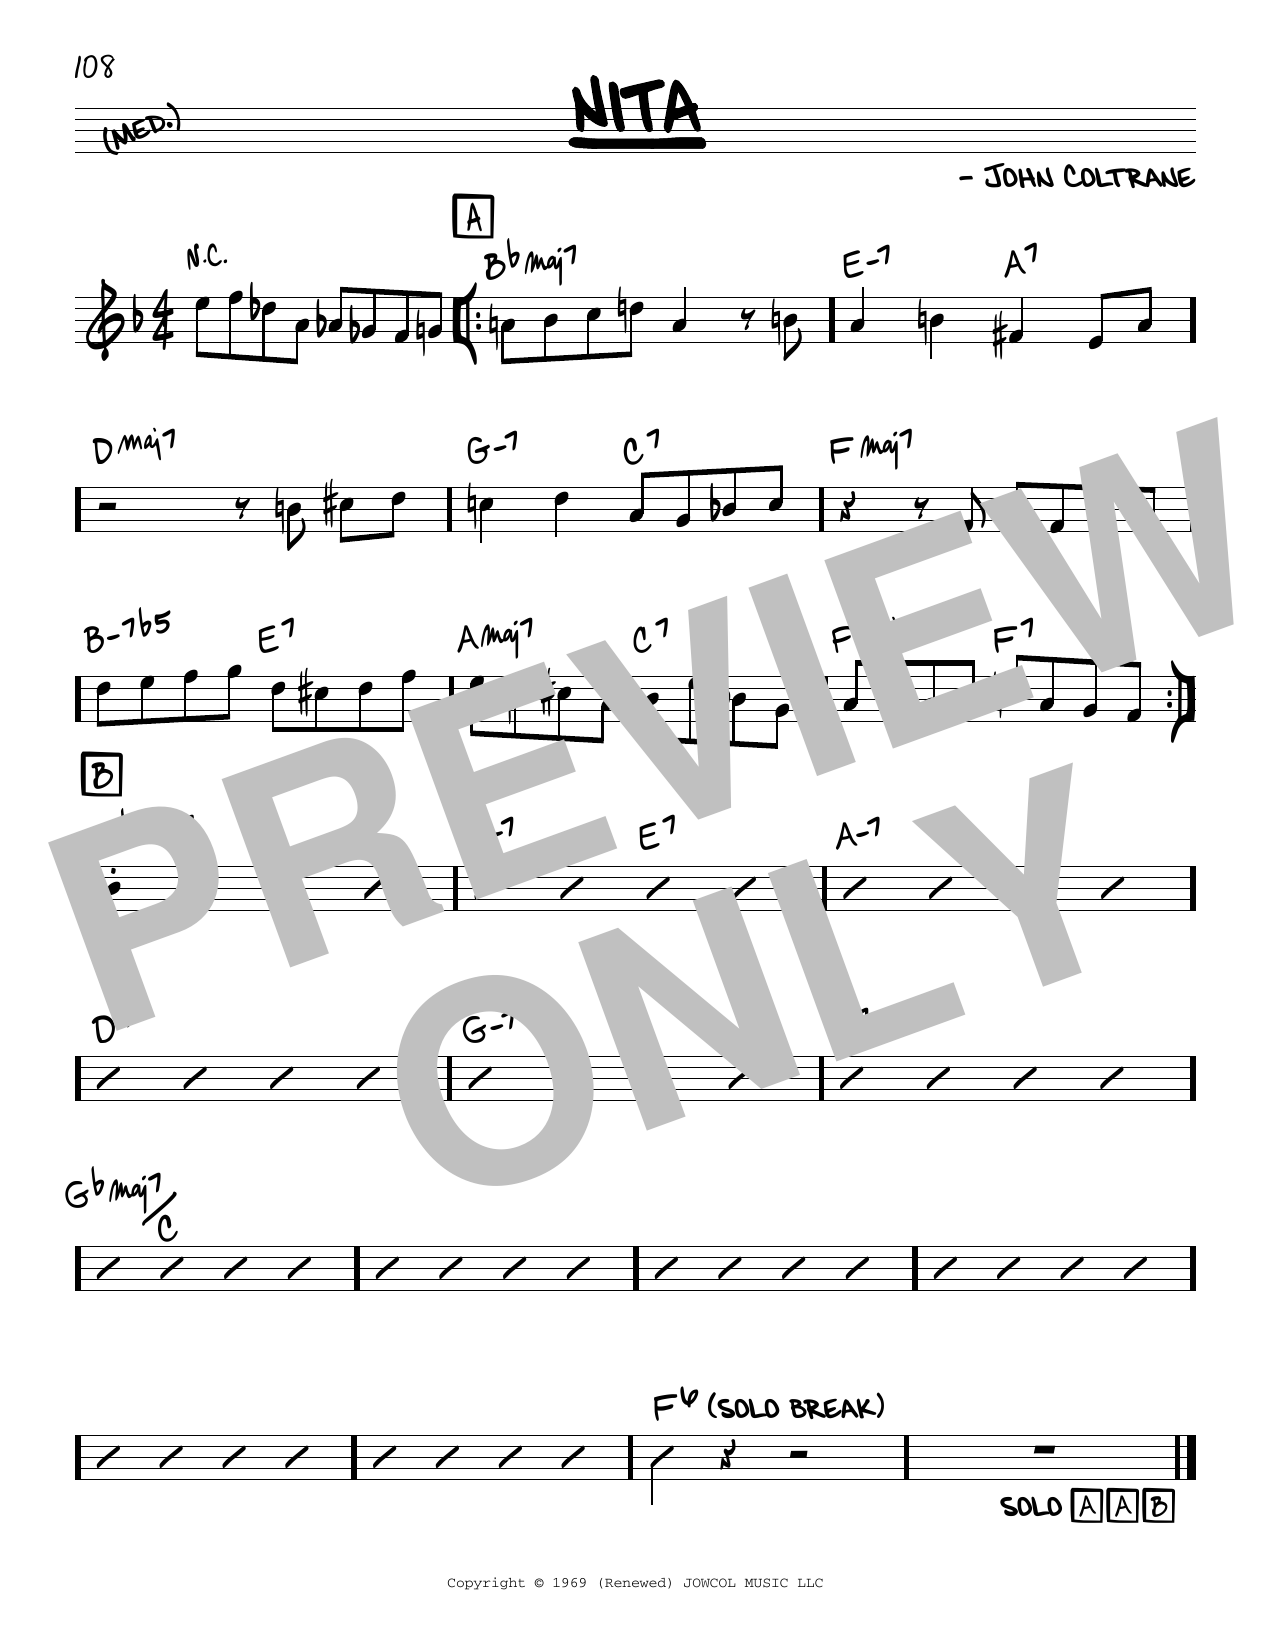 John Coltrane Nita Sheet Music Notes & Chords for Real Book – Melody & Chords - Download or Print PDF